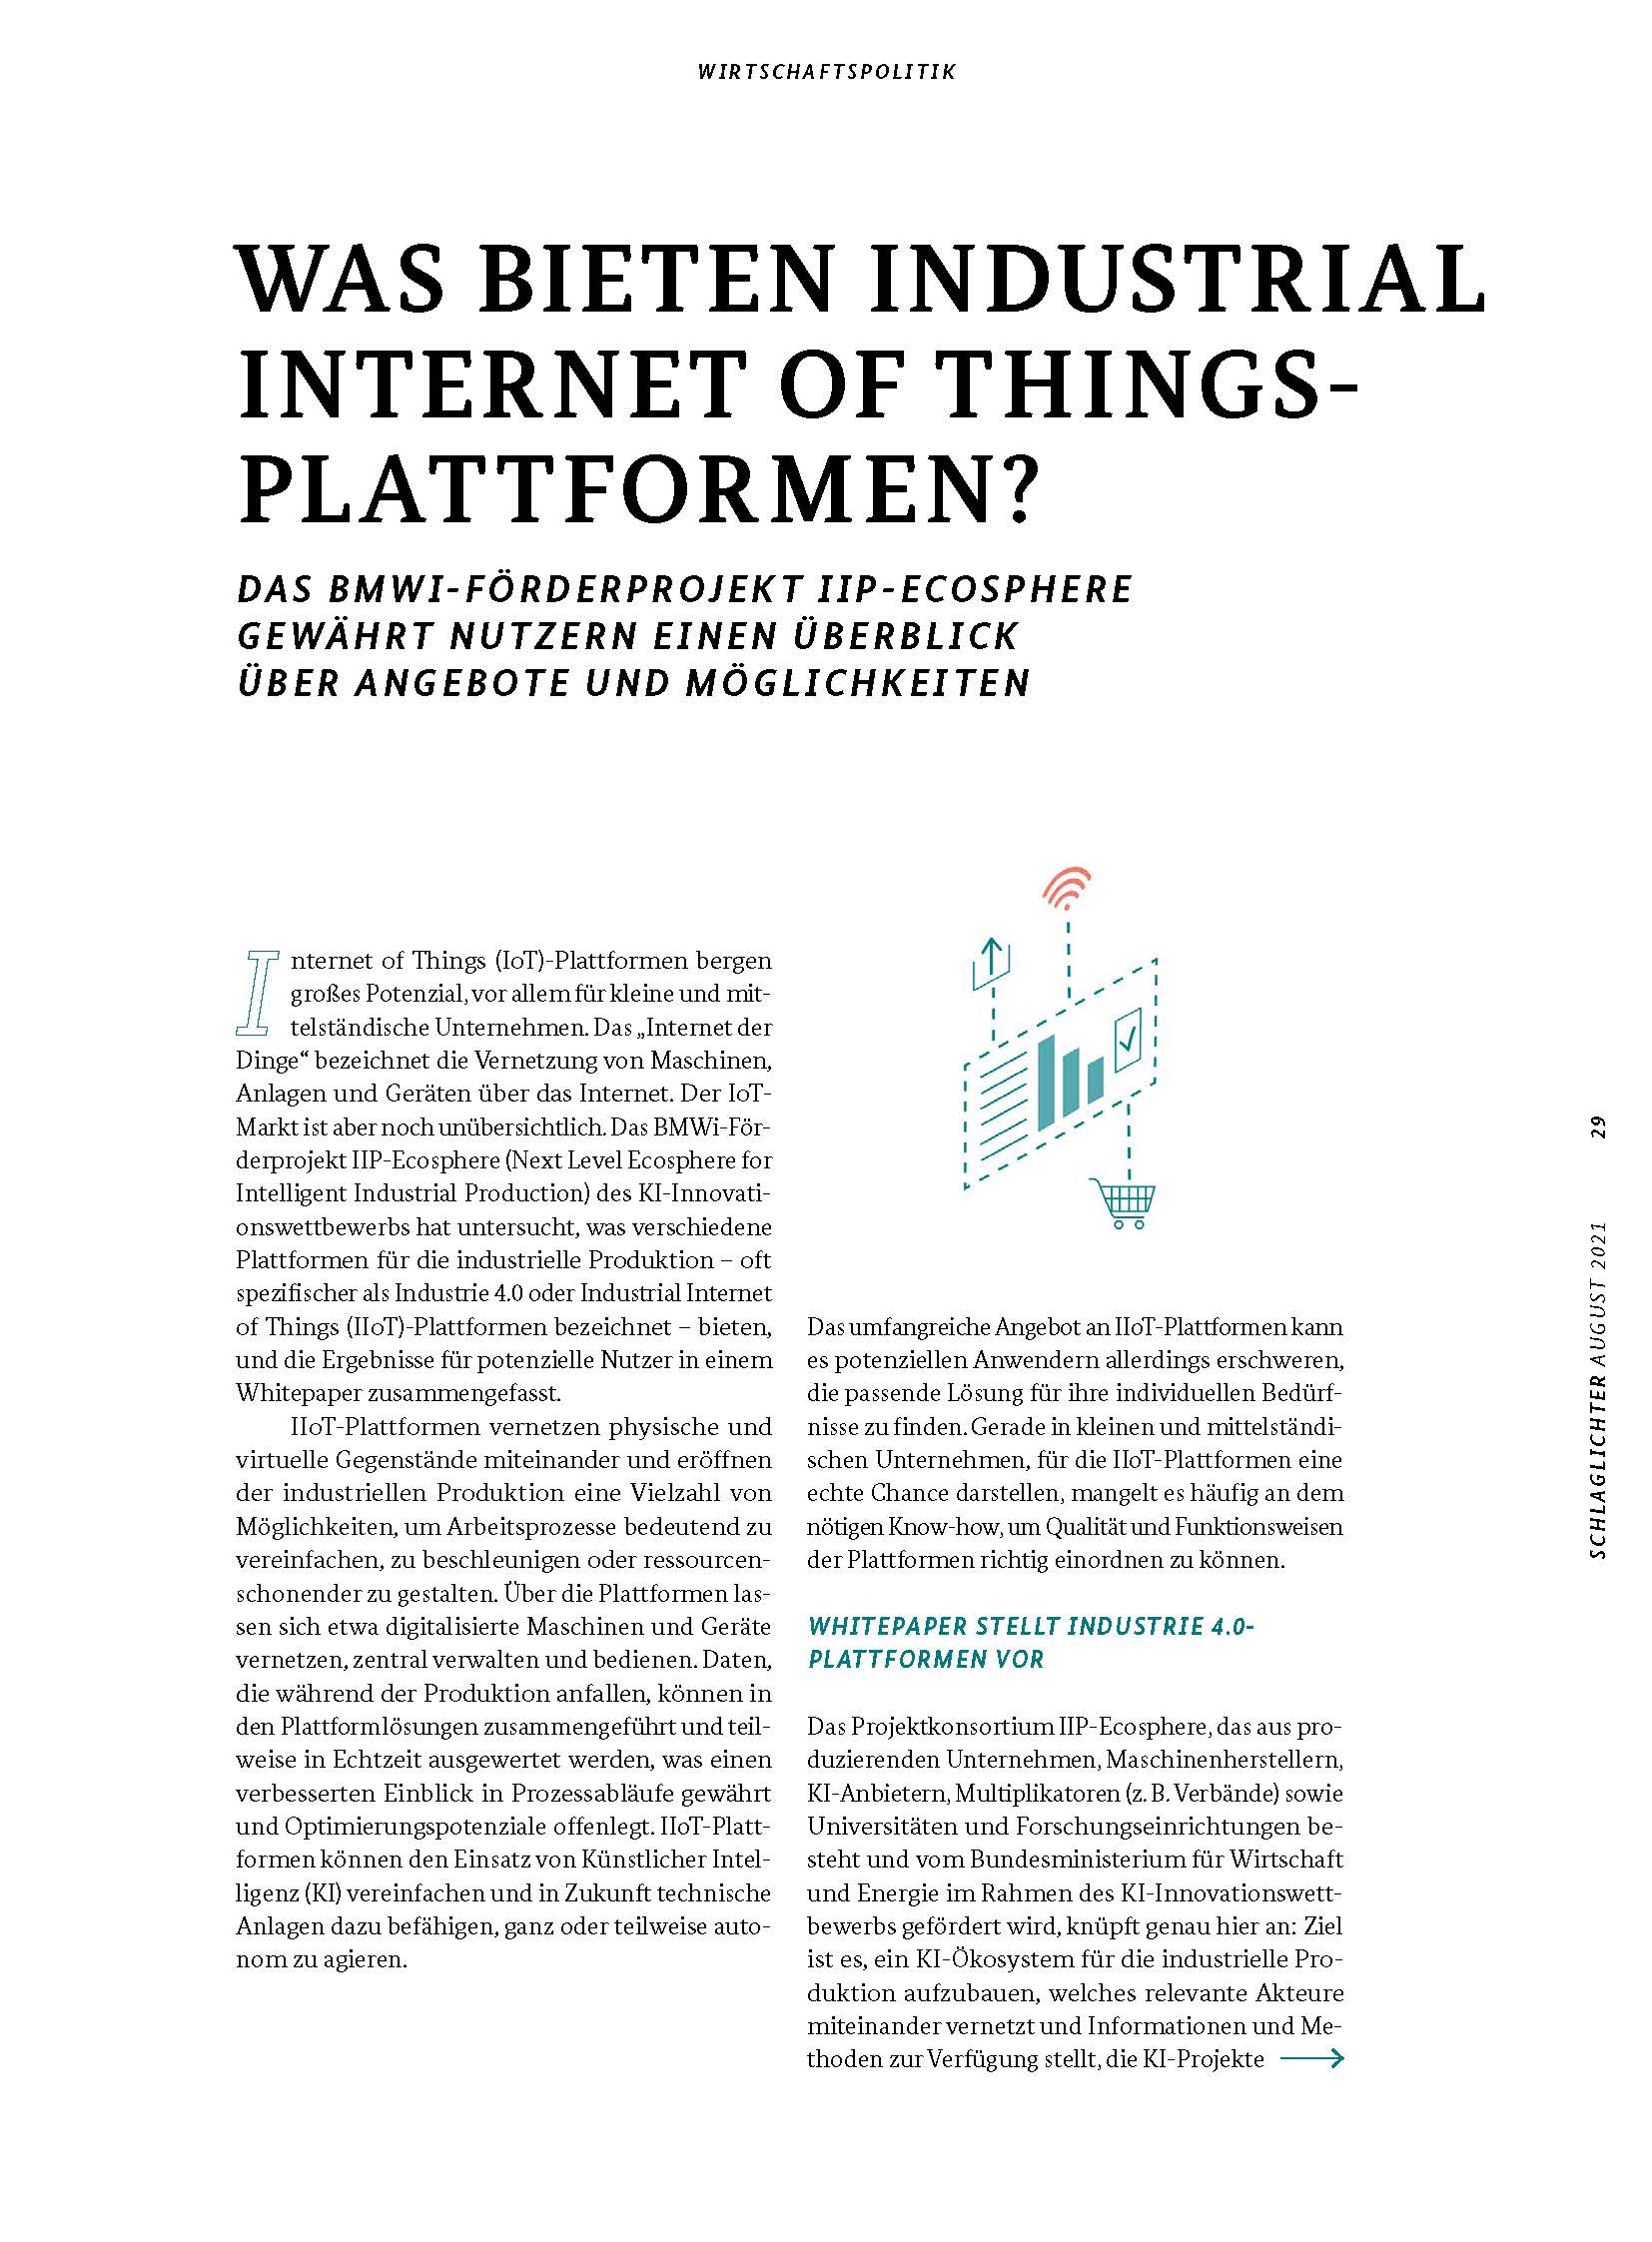 Was bieten International Internet of Things-Plattformen?